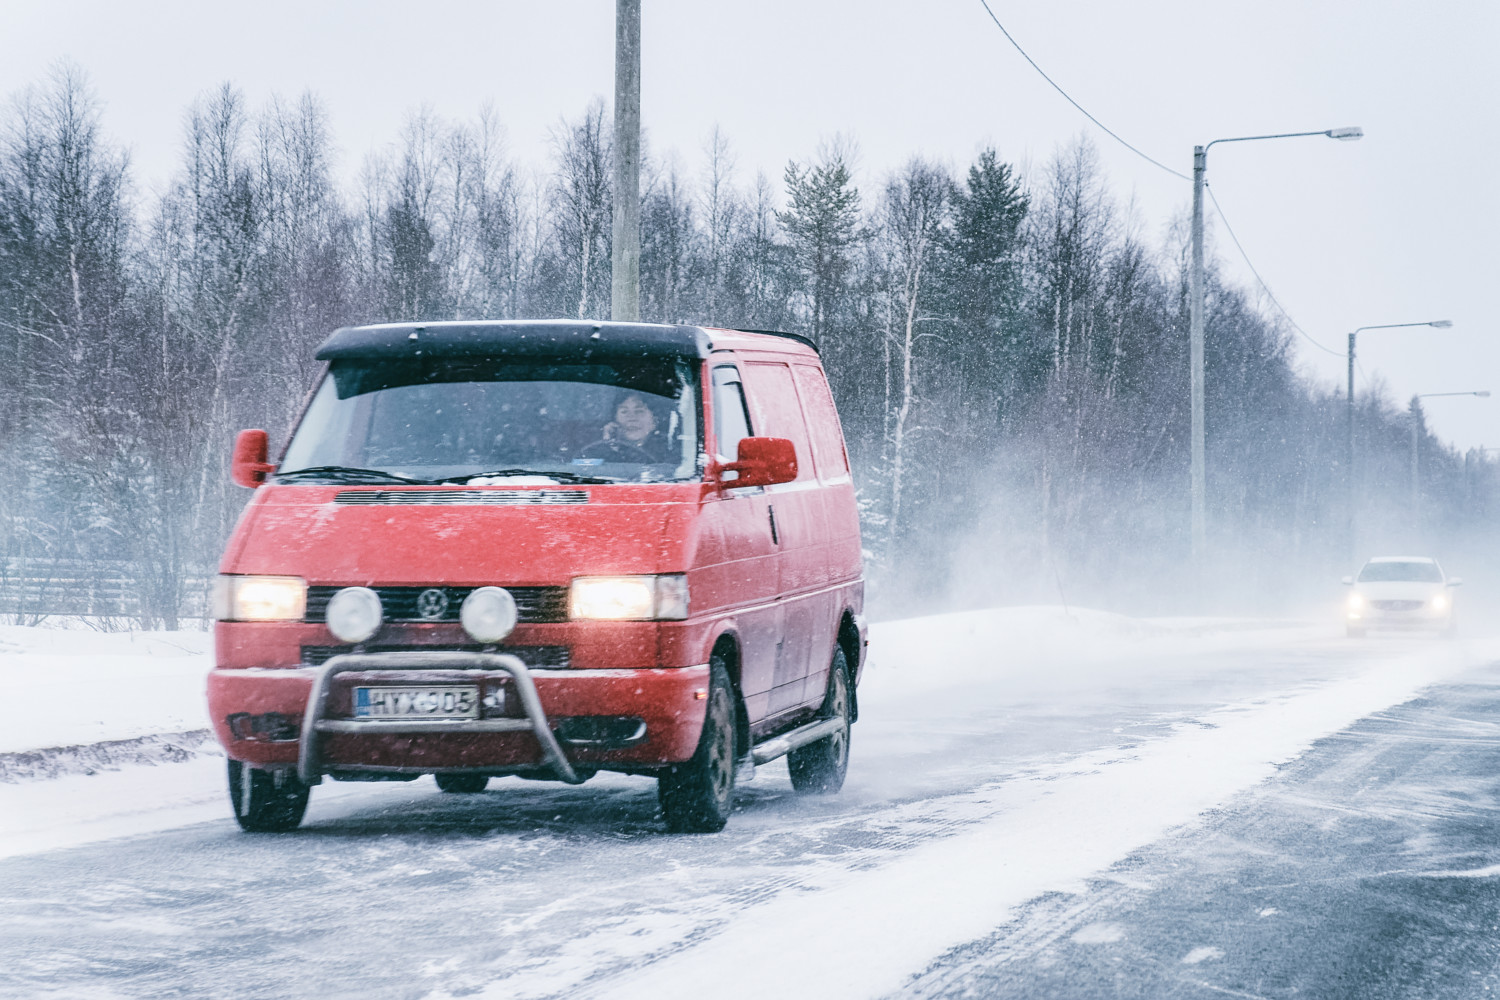 Mini van at the Snowy Winter Road Finland Lapland EU